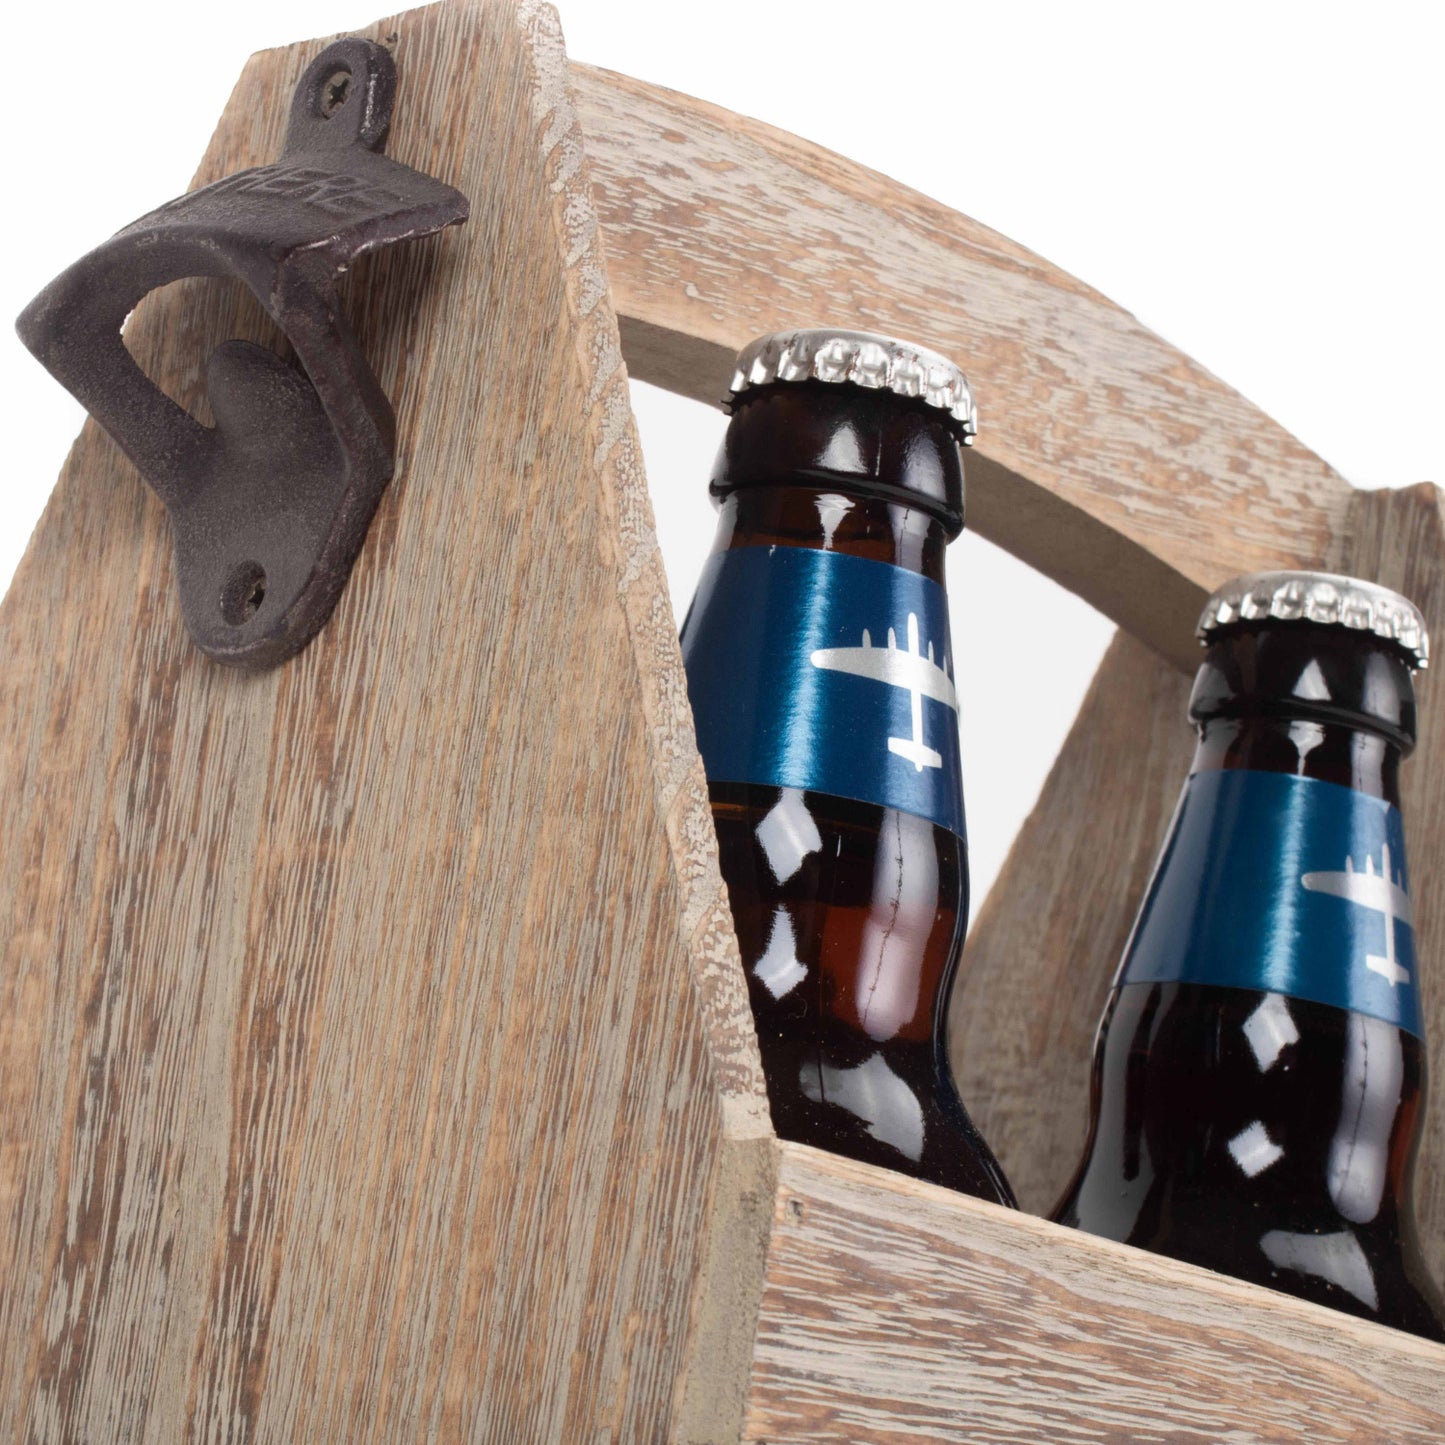 Oak Effect 4 Beer Bottle Carrier With Bottle Opener